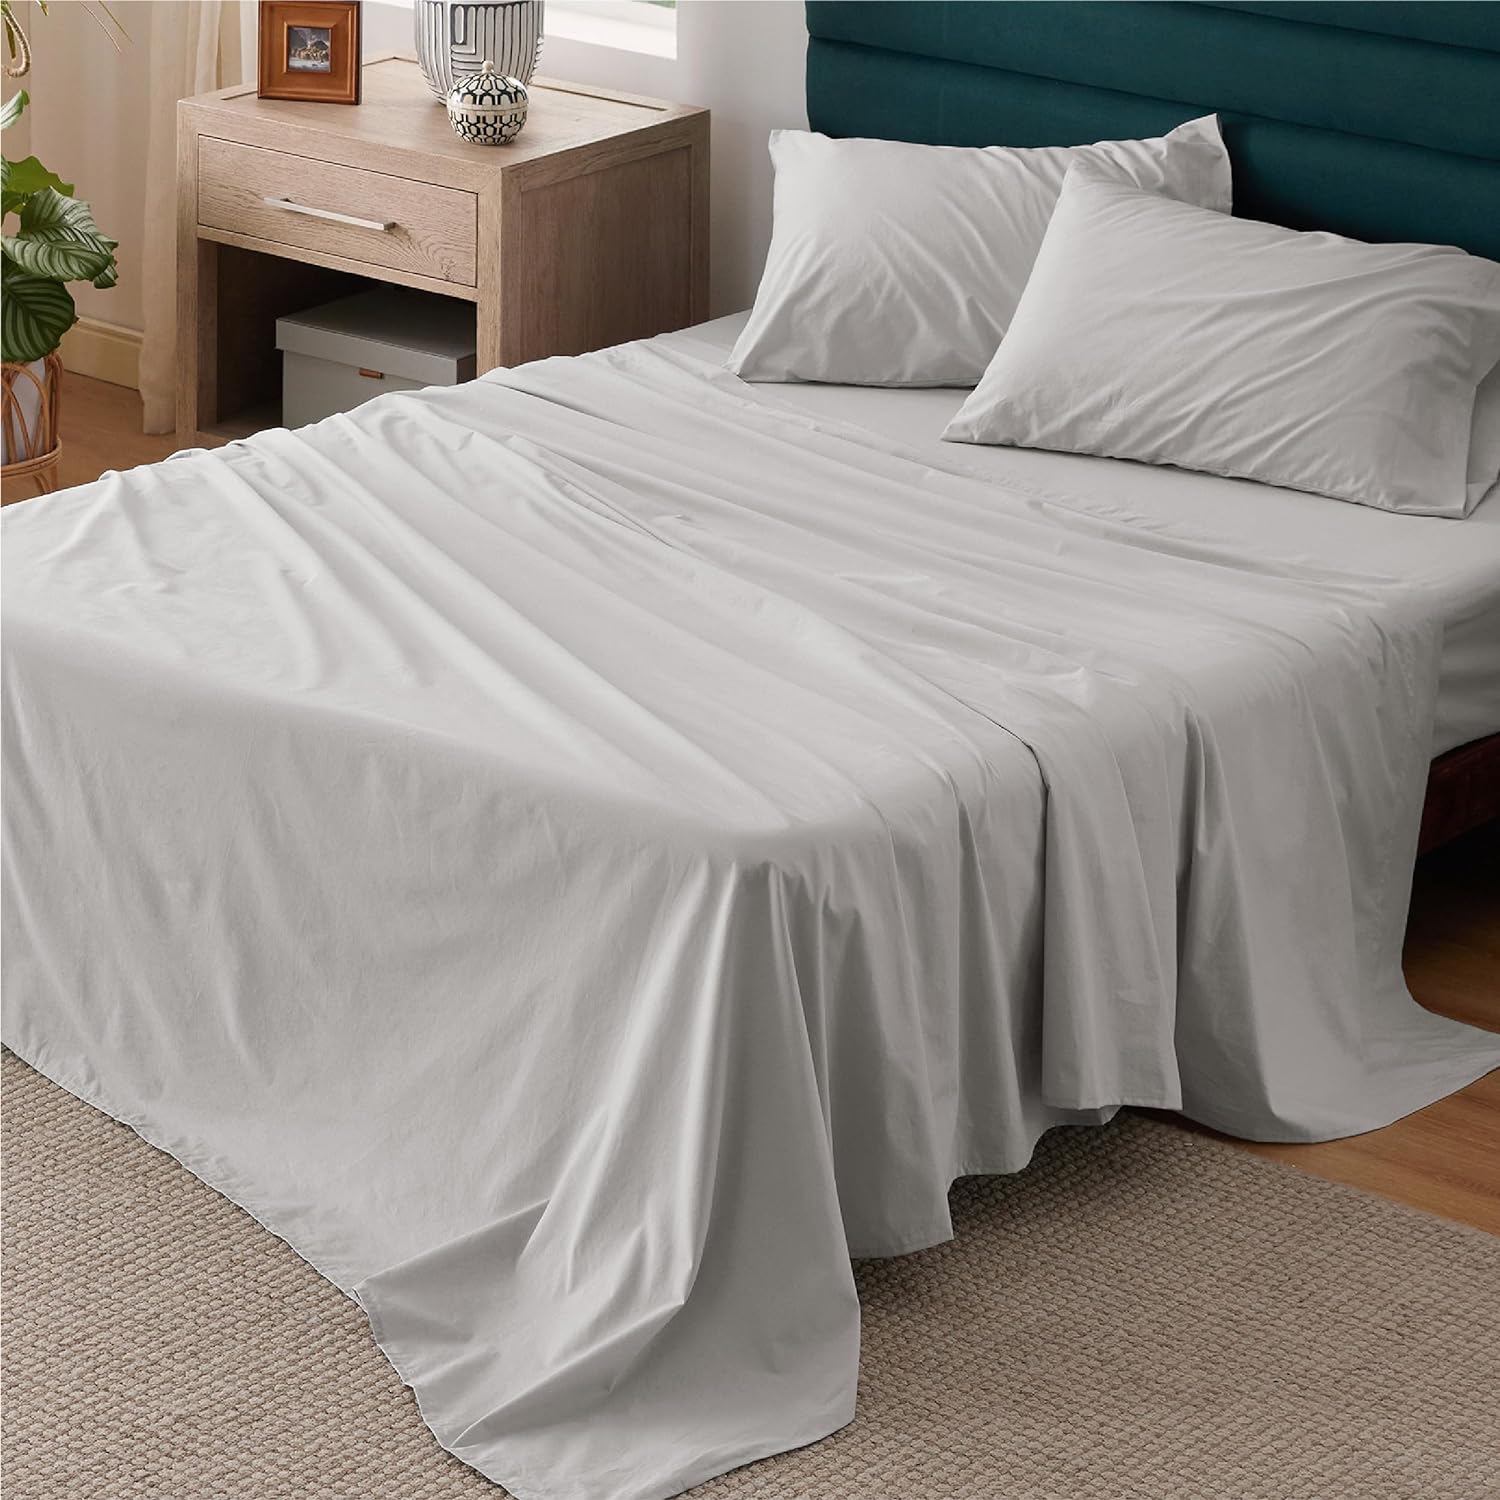 Bedsure 100% Cotton Sheet Set